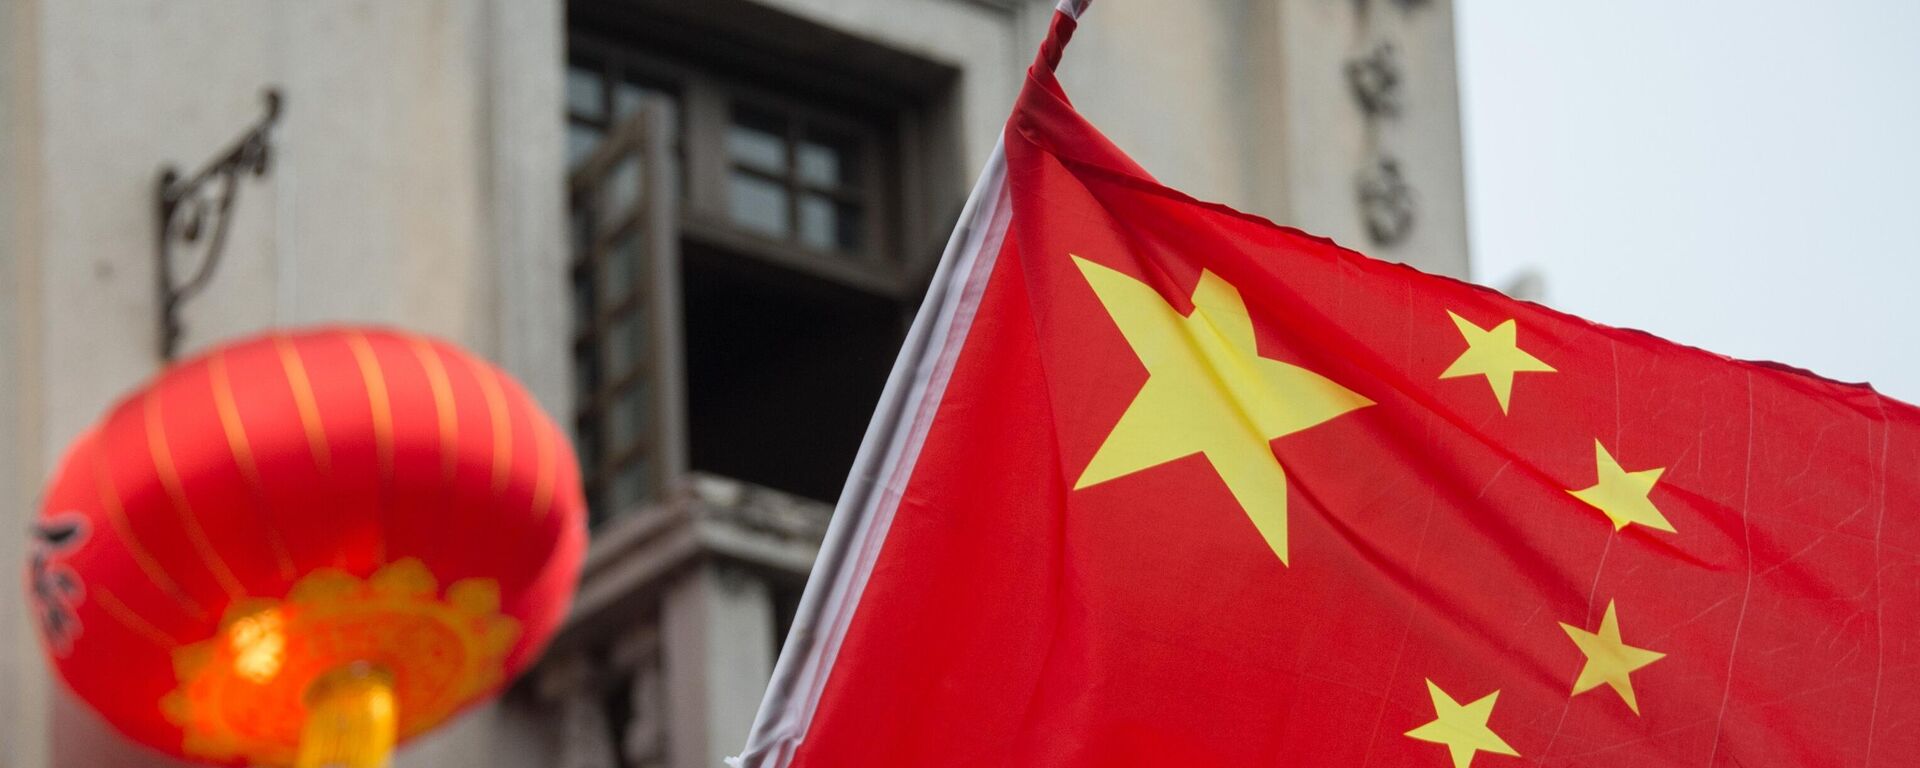 Флаг Китая в Ханчжоу в КНР, архивное фото - Sputnik Литва, 1920, 19.08.2021